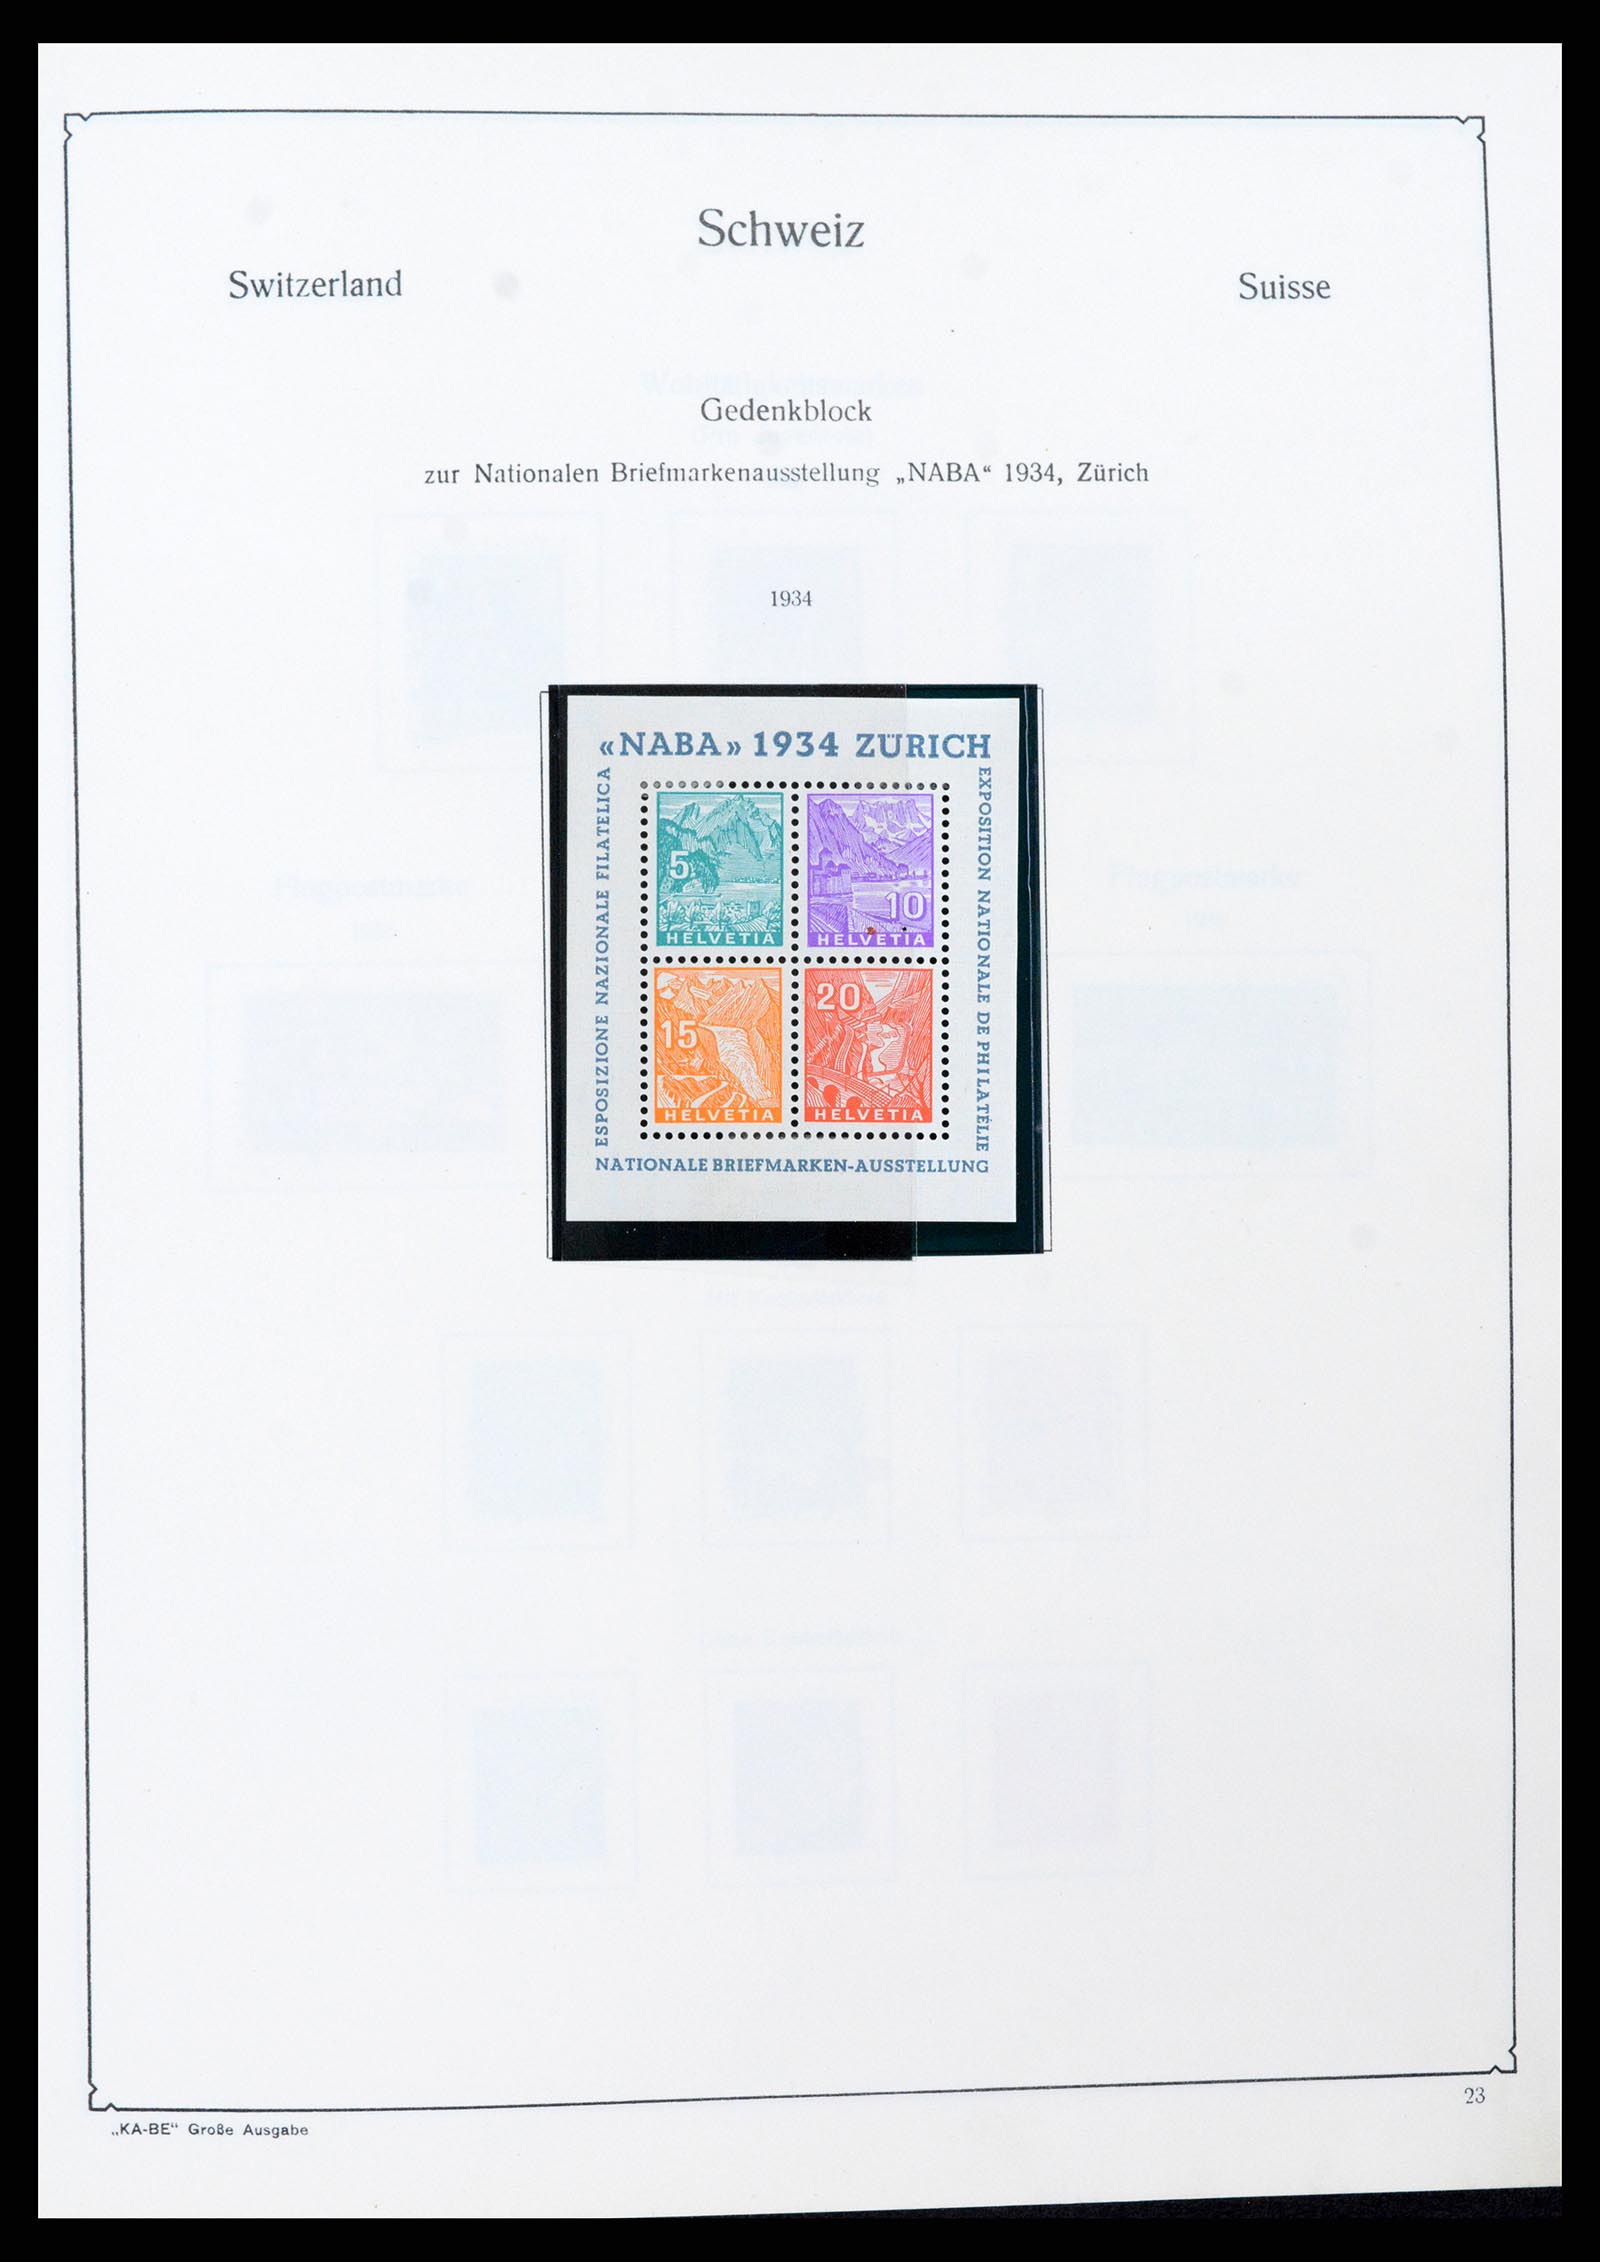 37588 022 - Stamp collection 37588 Switzerland 1854-1974.